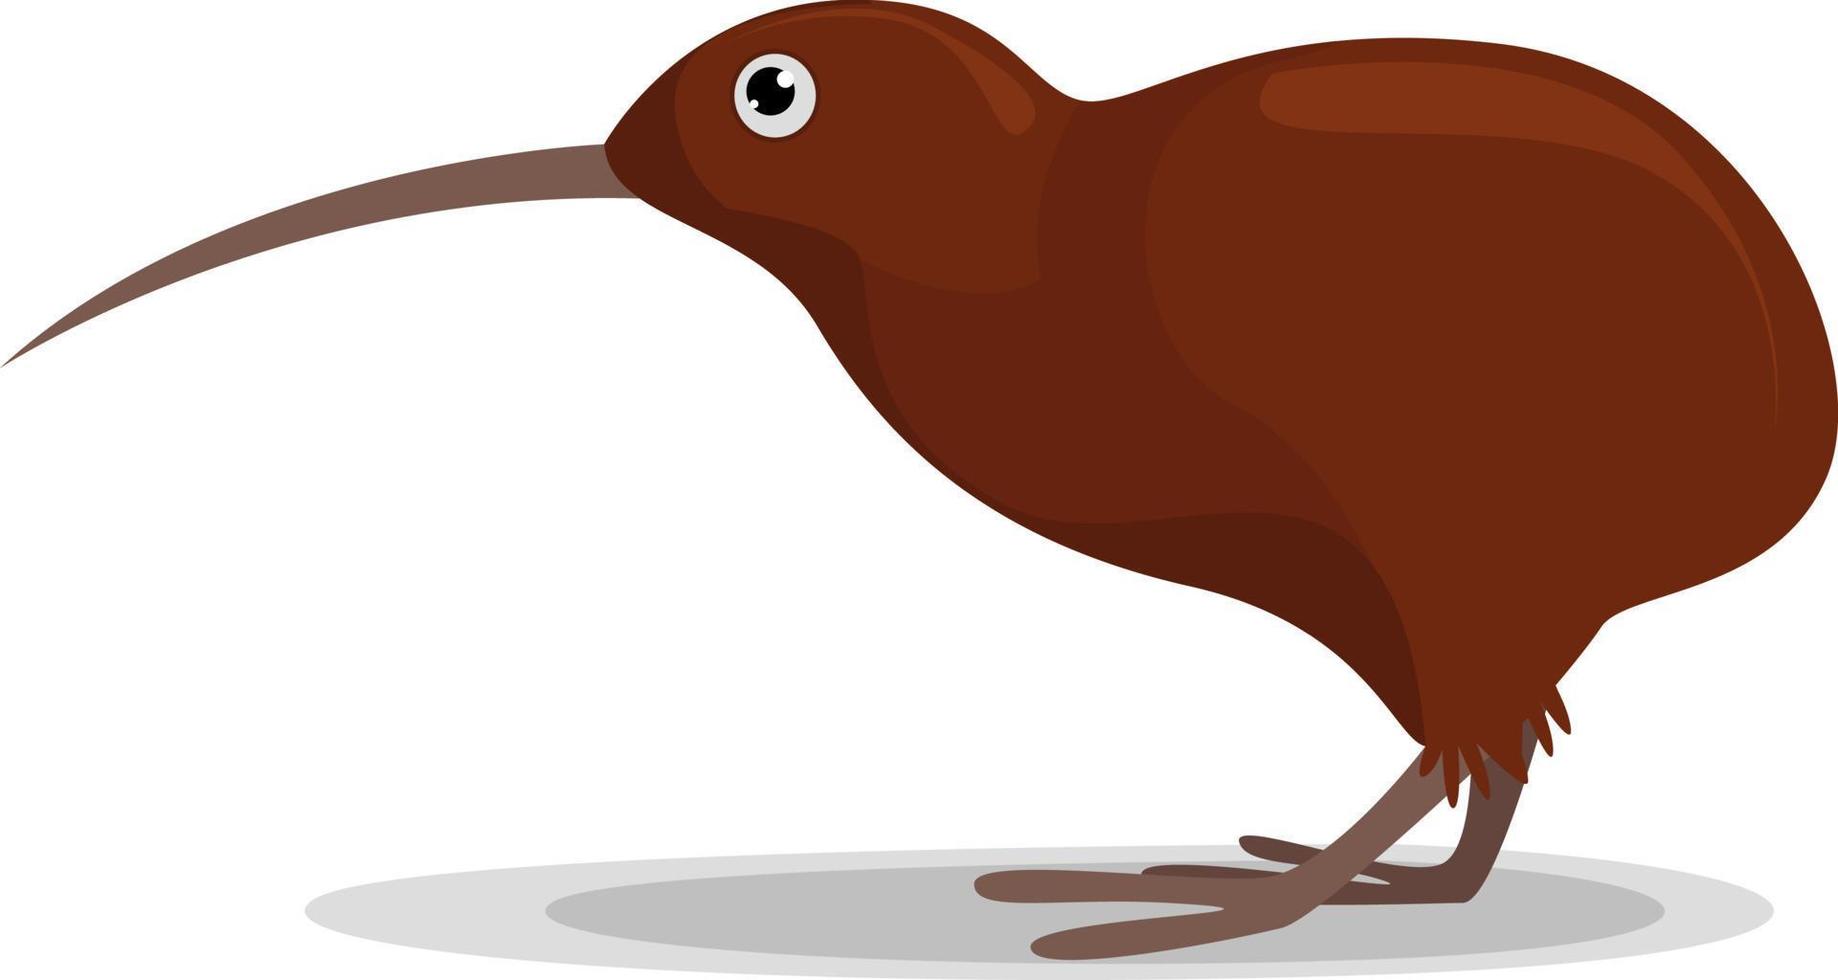 Sad kiwi bird, illustration, vector on white background